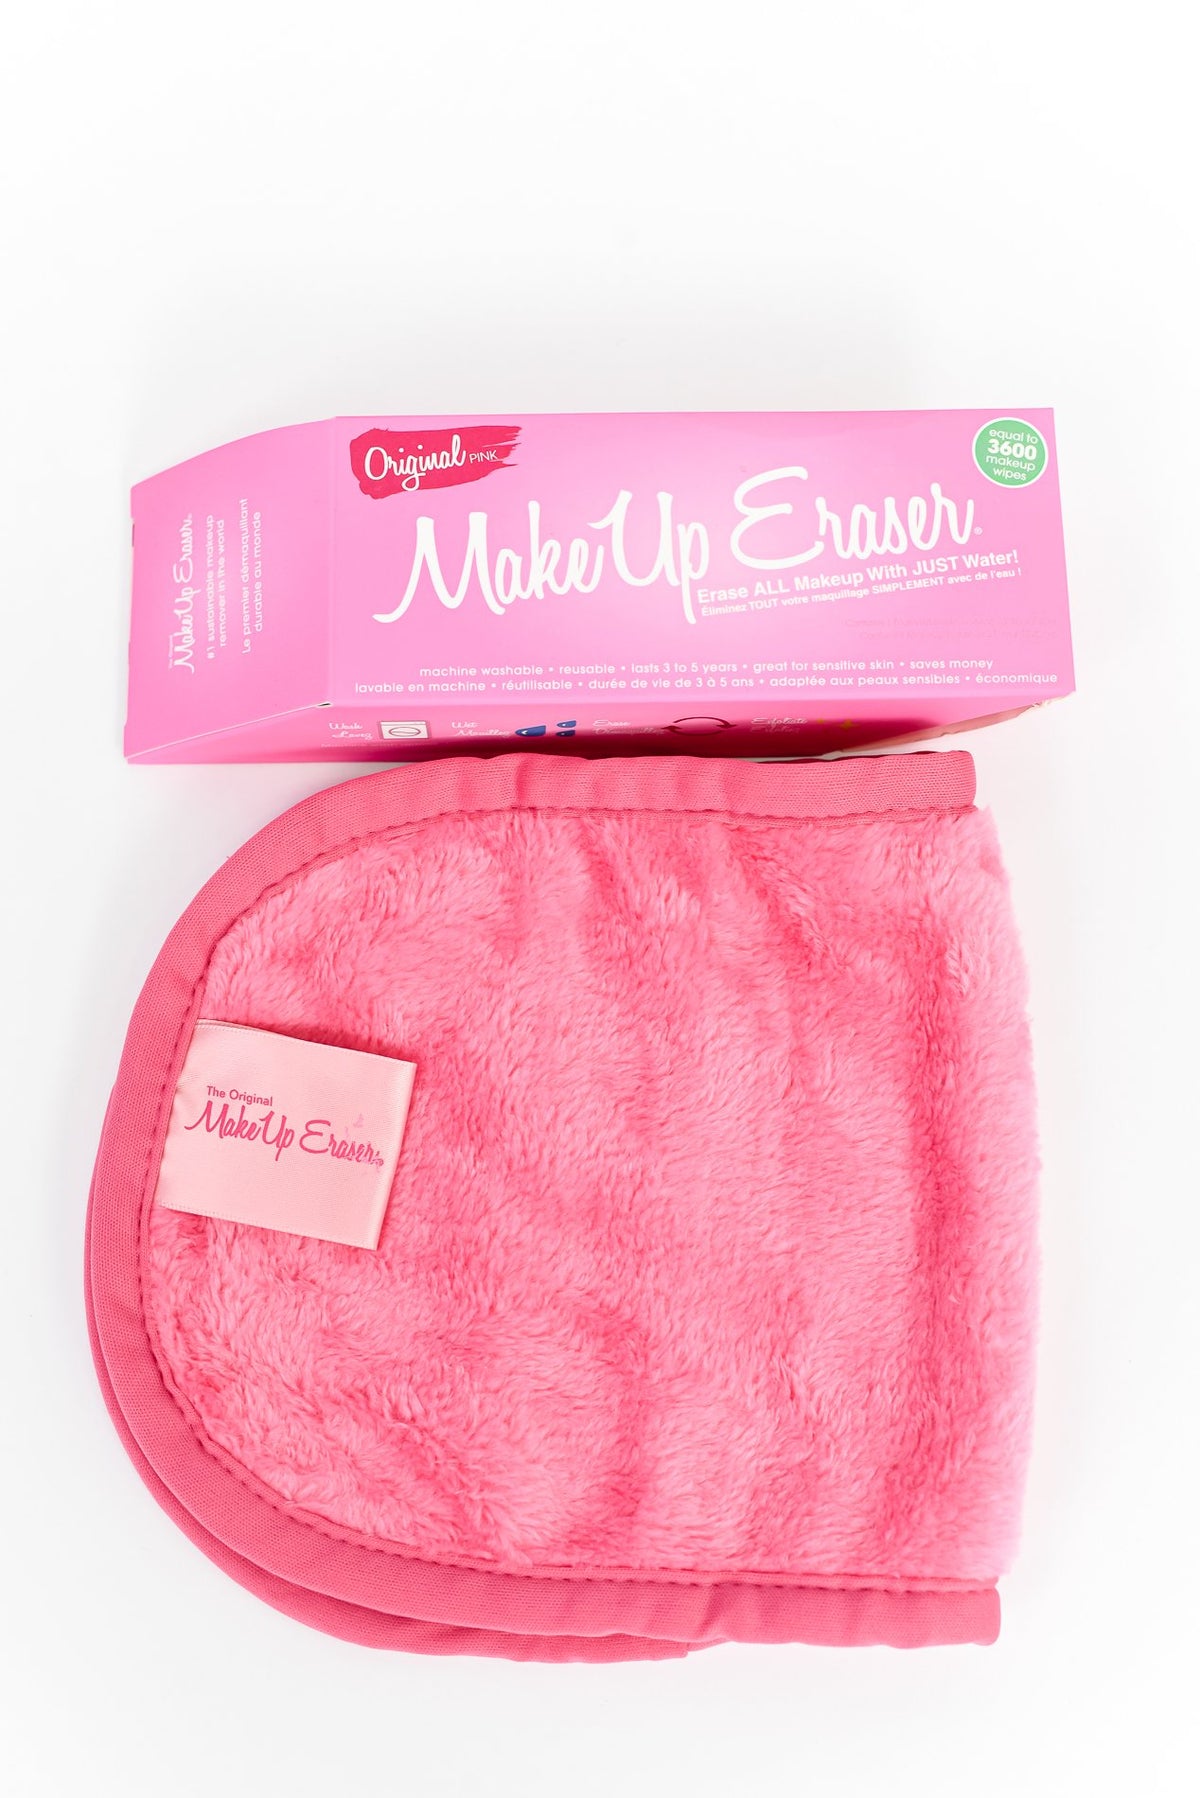 Makeup Eraser - Original Pink - BTY124PK